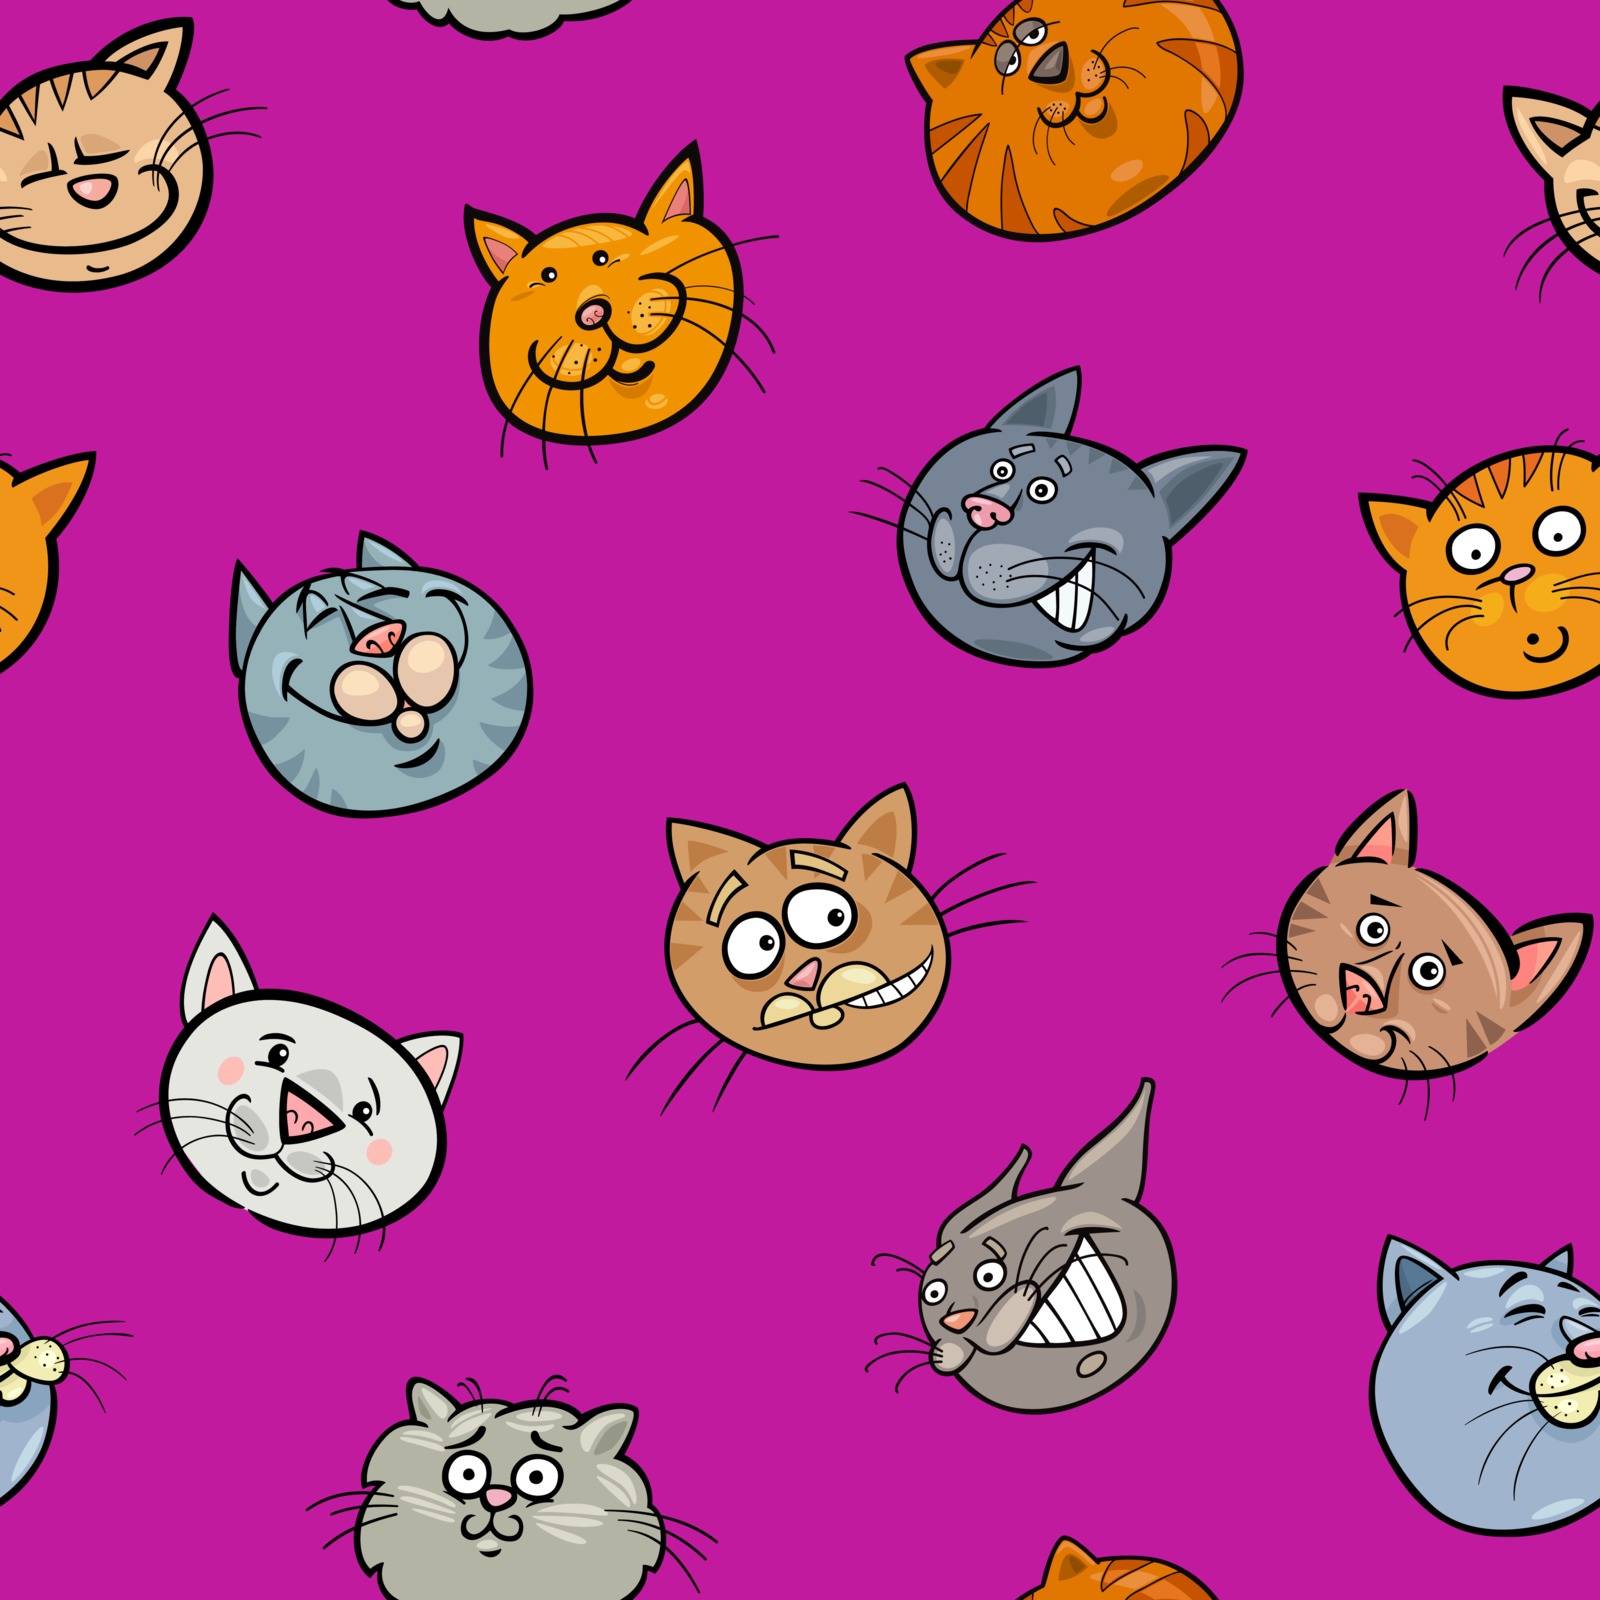 cartoon wallpaper with cats by izakowski